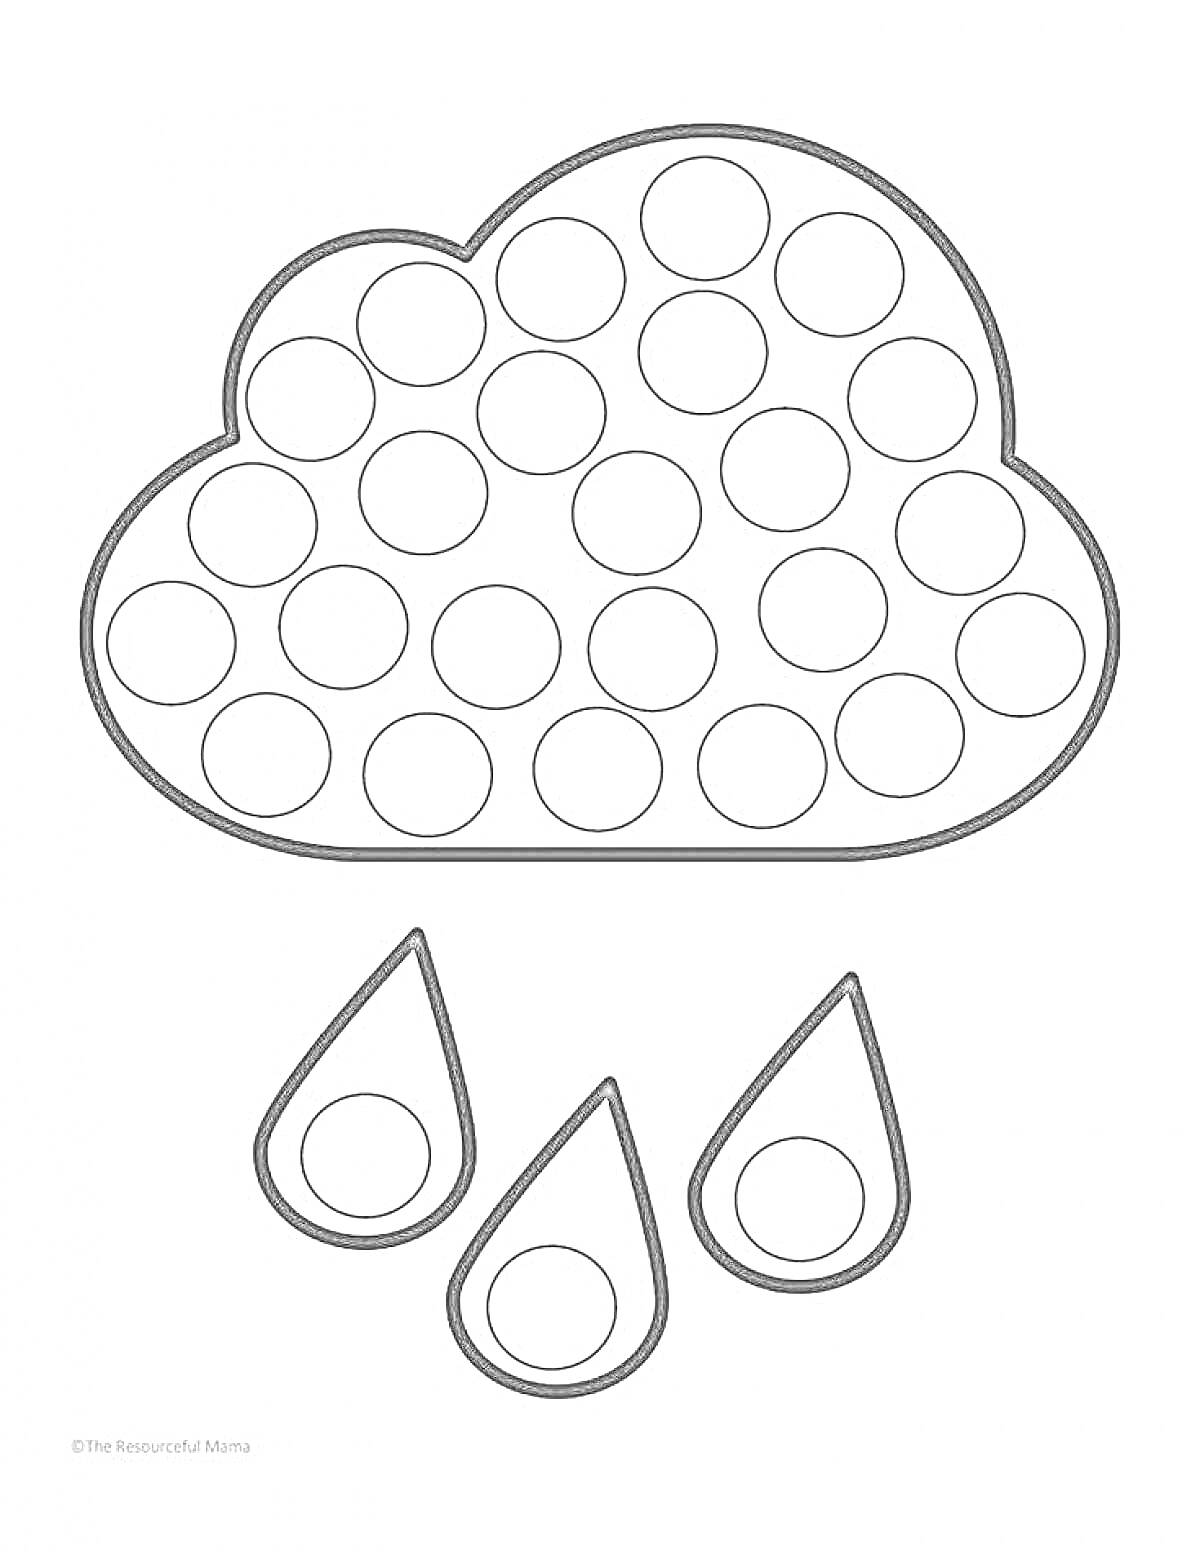 Раскраска Тучка с каплями дождя и кружками внутри